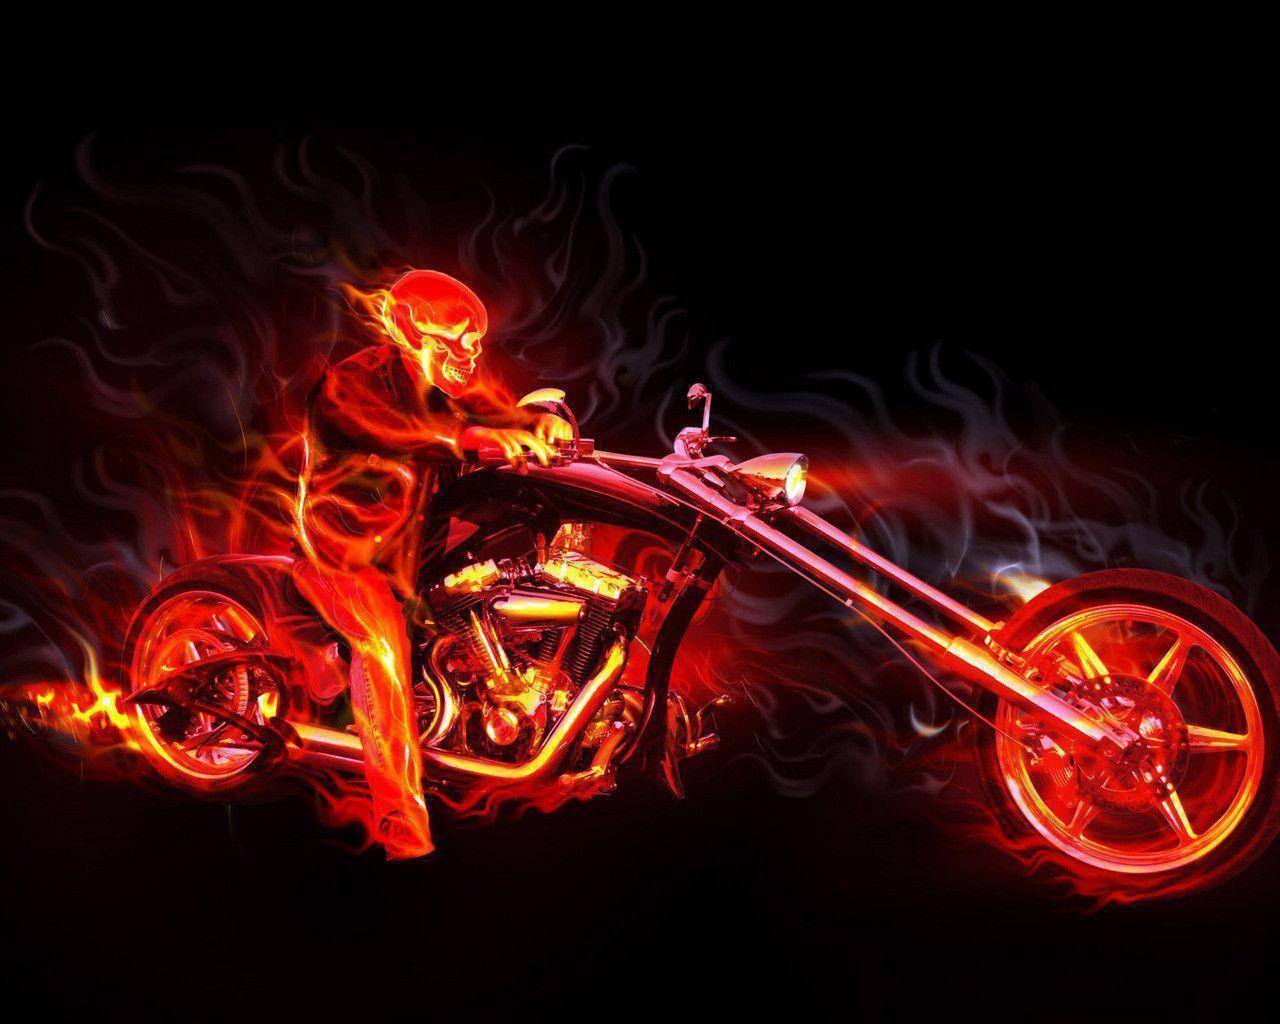 Ghost Rider Wallpaper Free Download, wallpaper, Ghost Rider